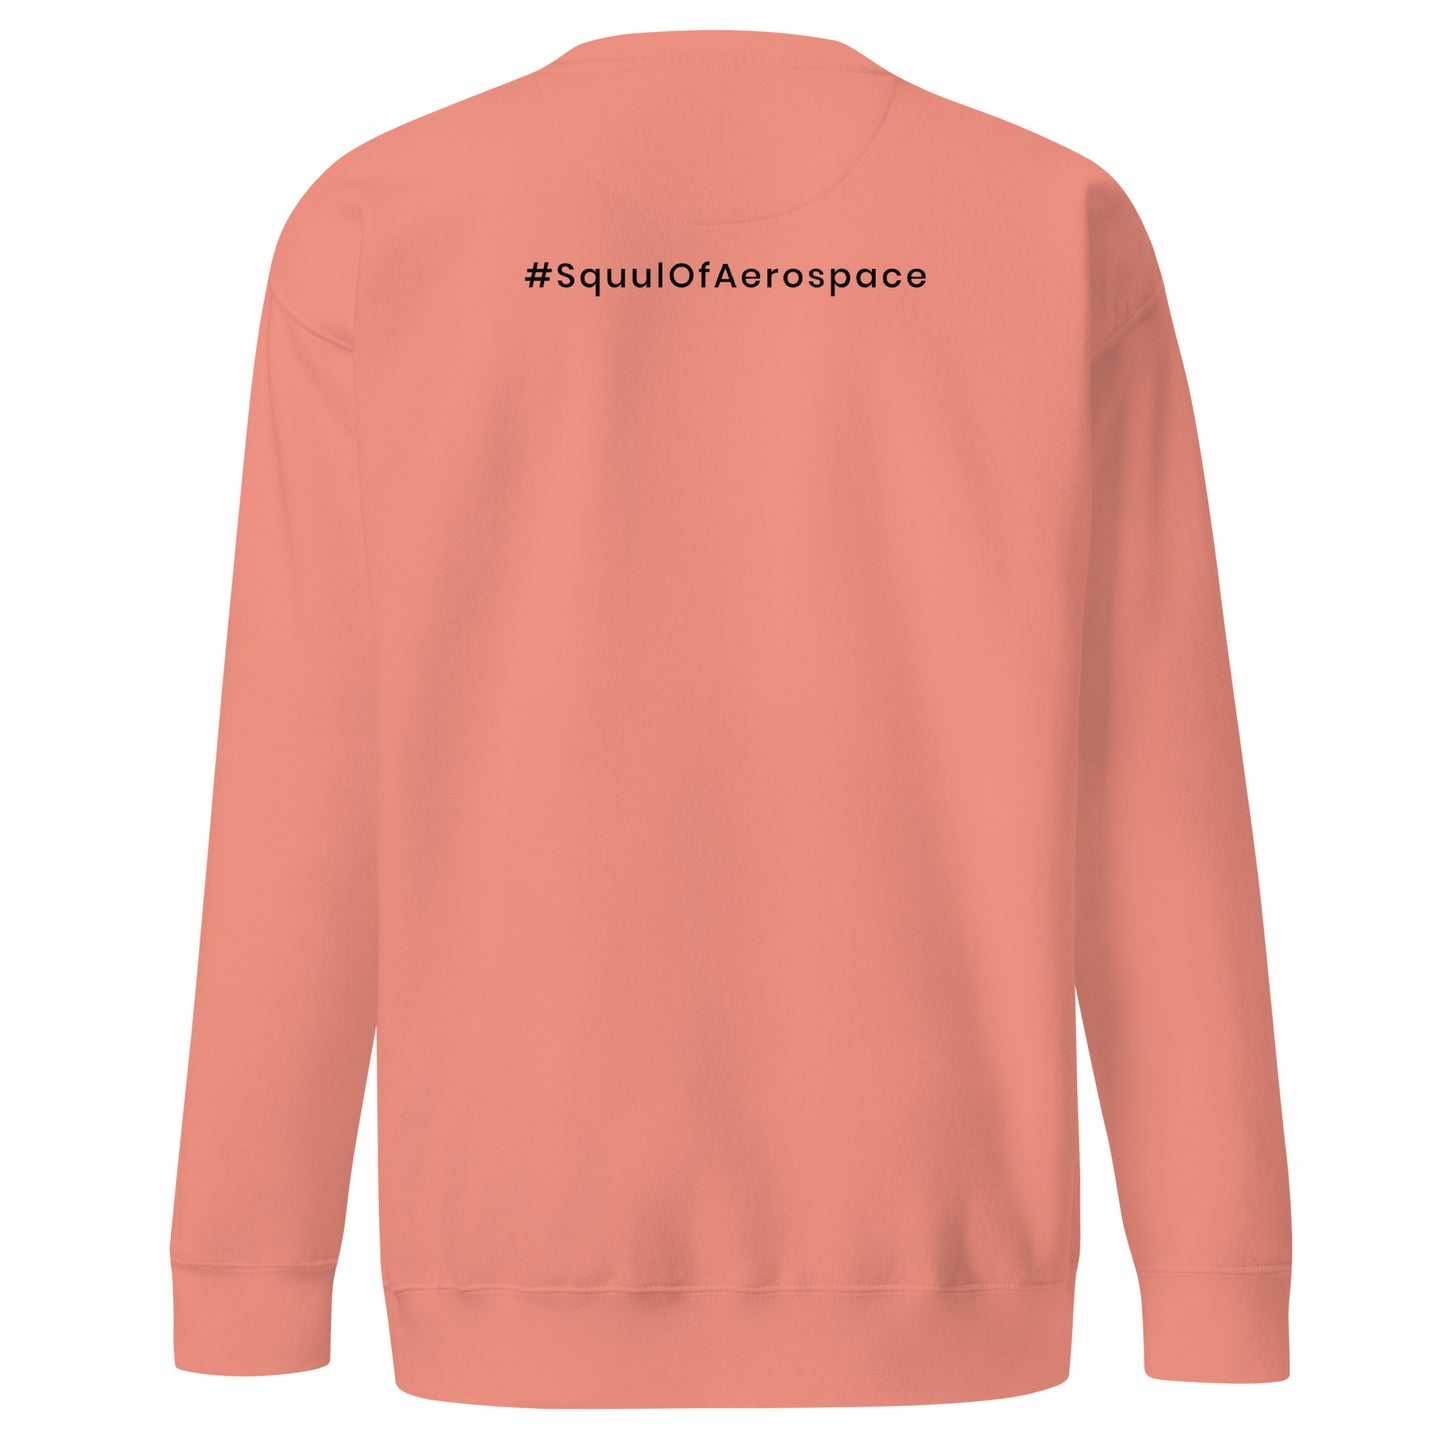 Premium Sweatshirt Astronaut Girl #SquulOfAerospace